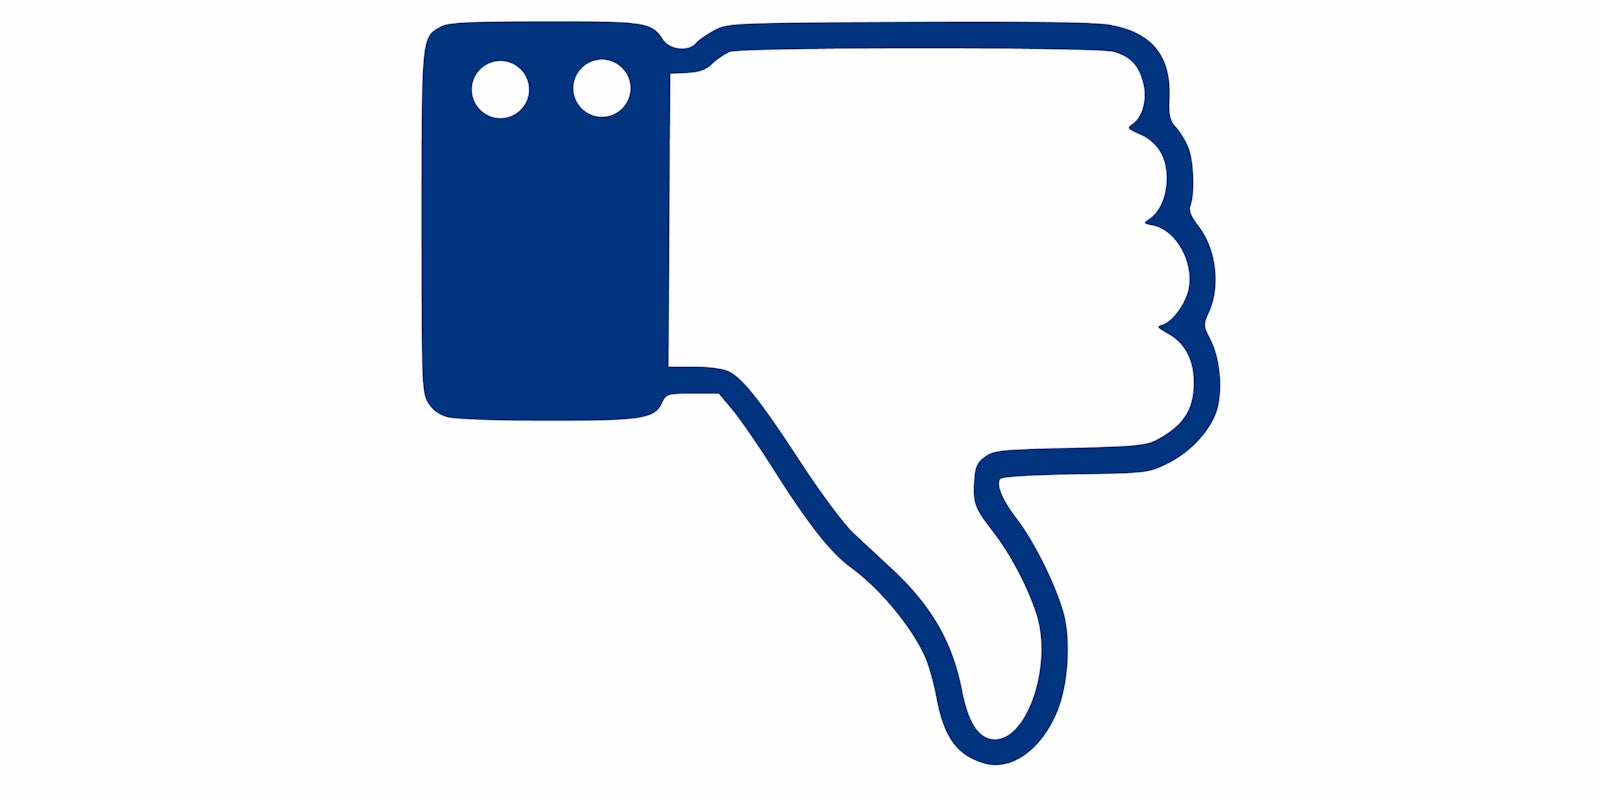 facebook downvote social media